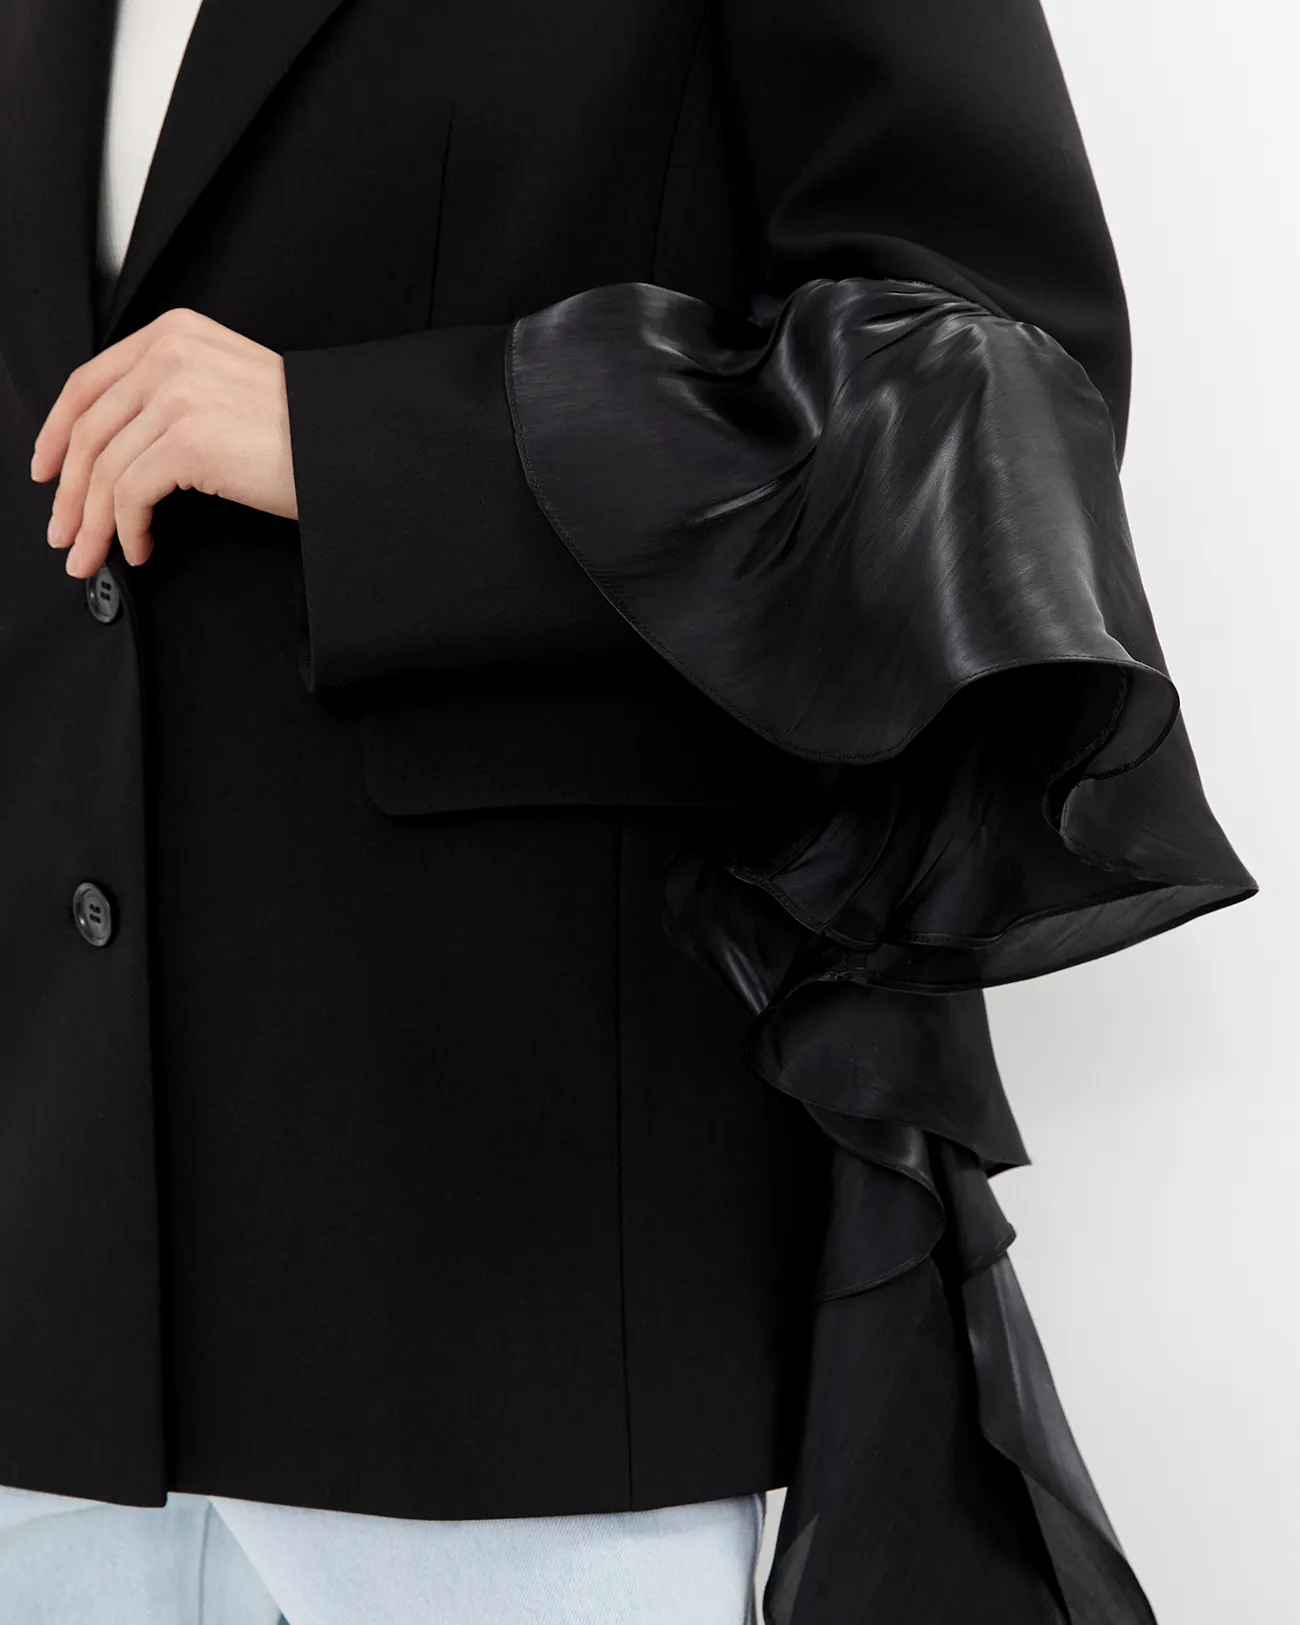 Жакет с рюшами на рукавах черного цвета